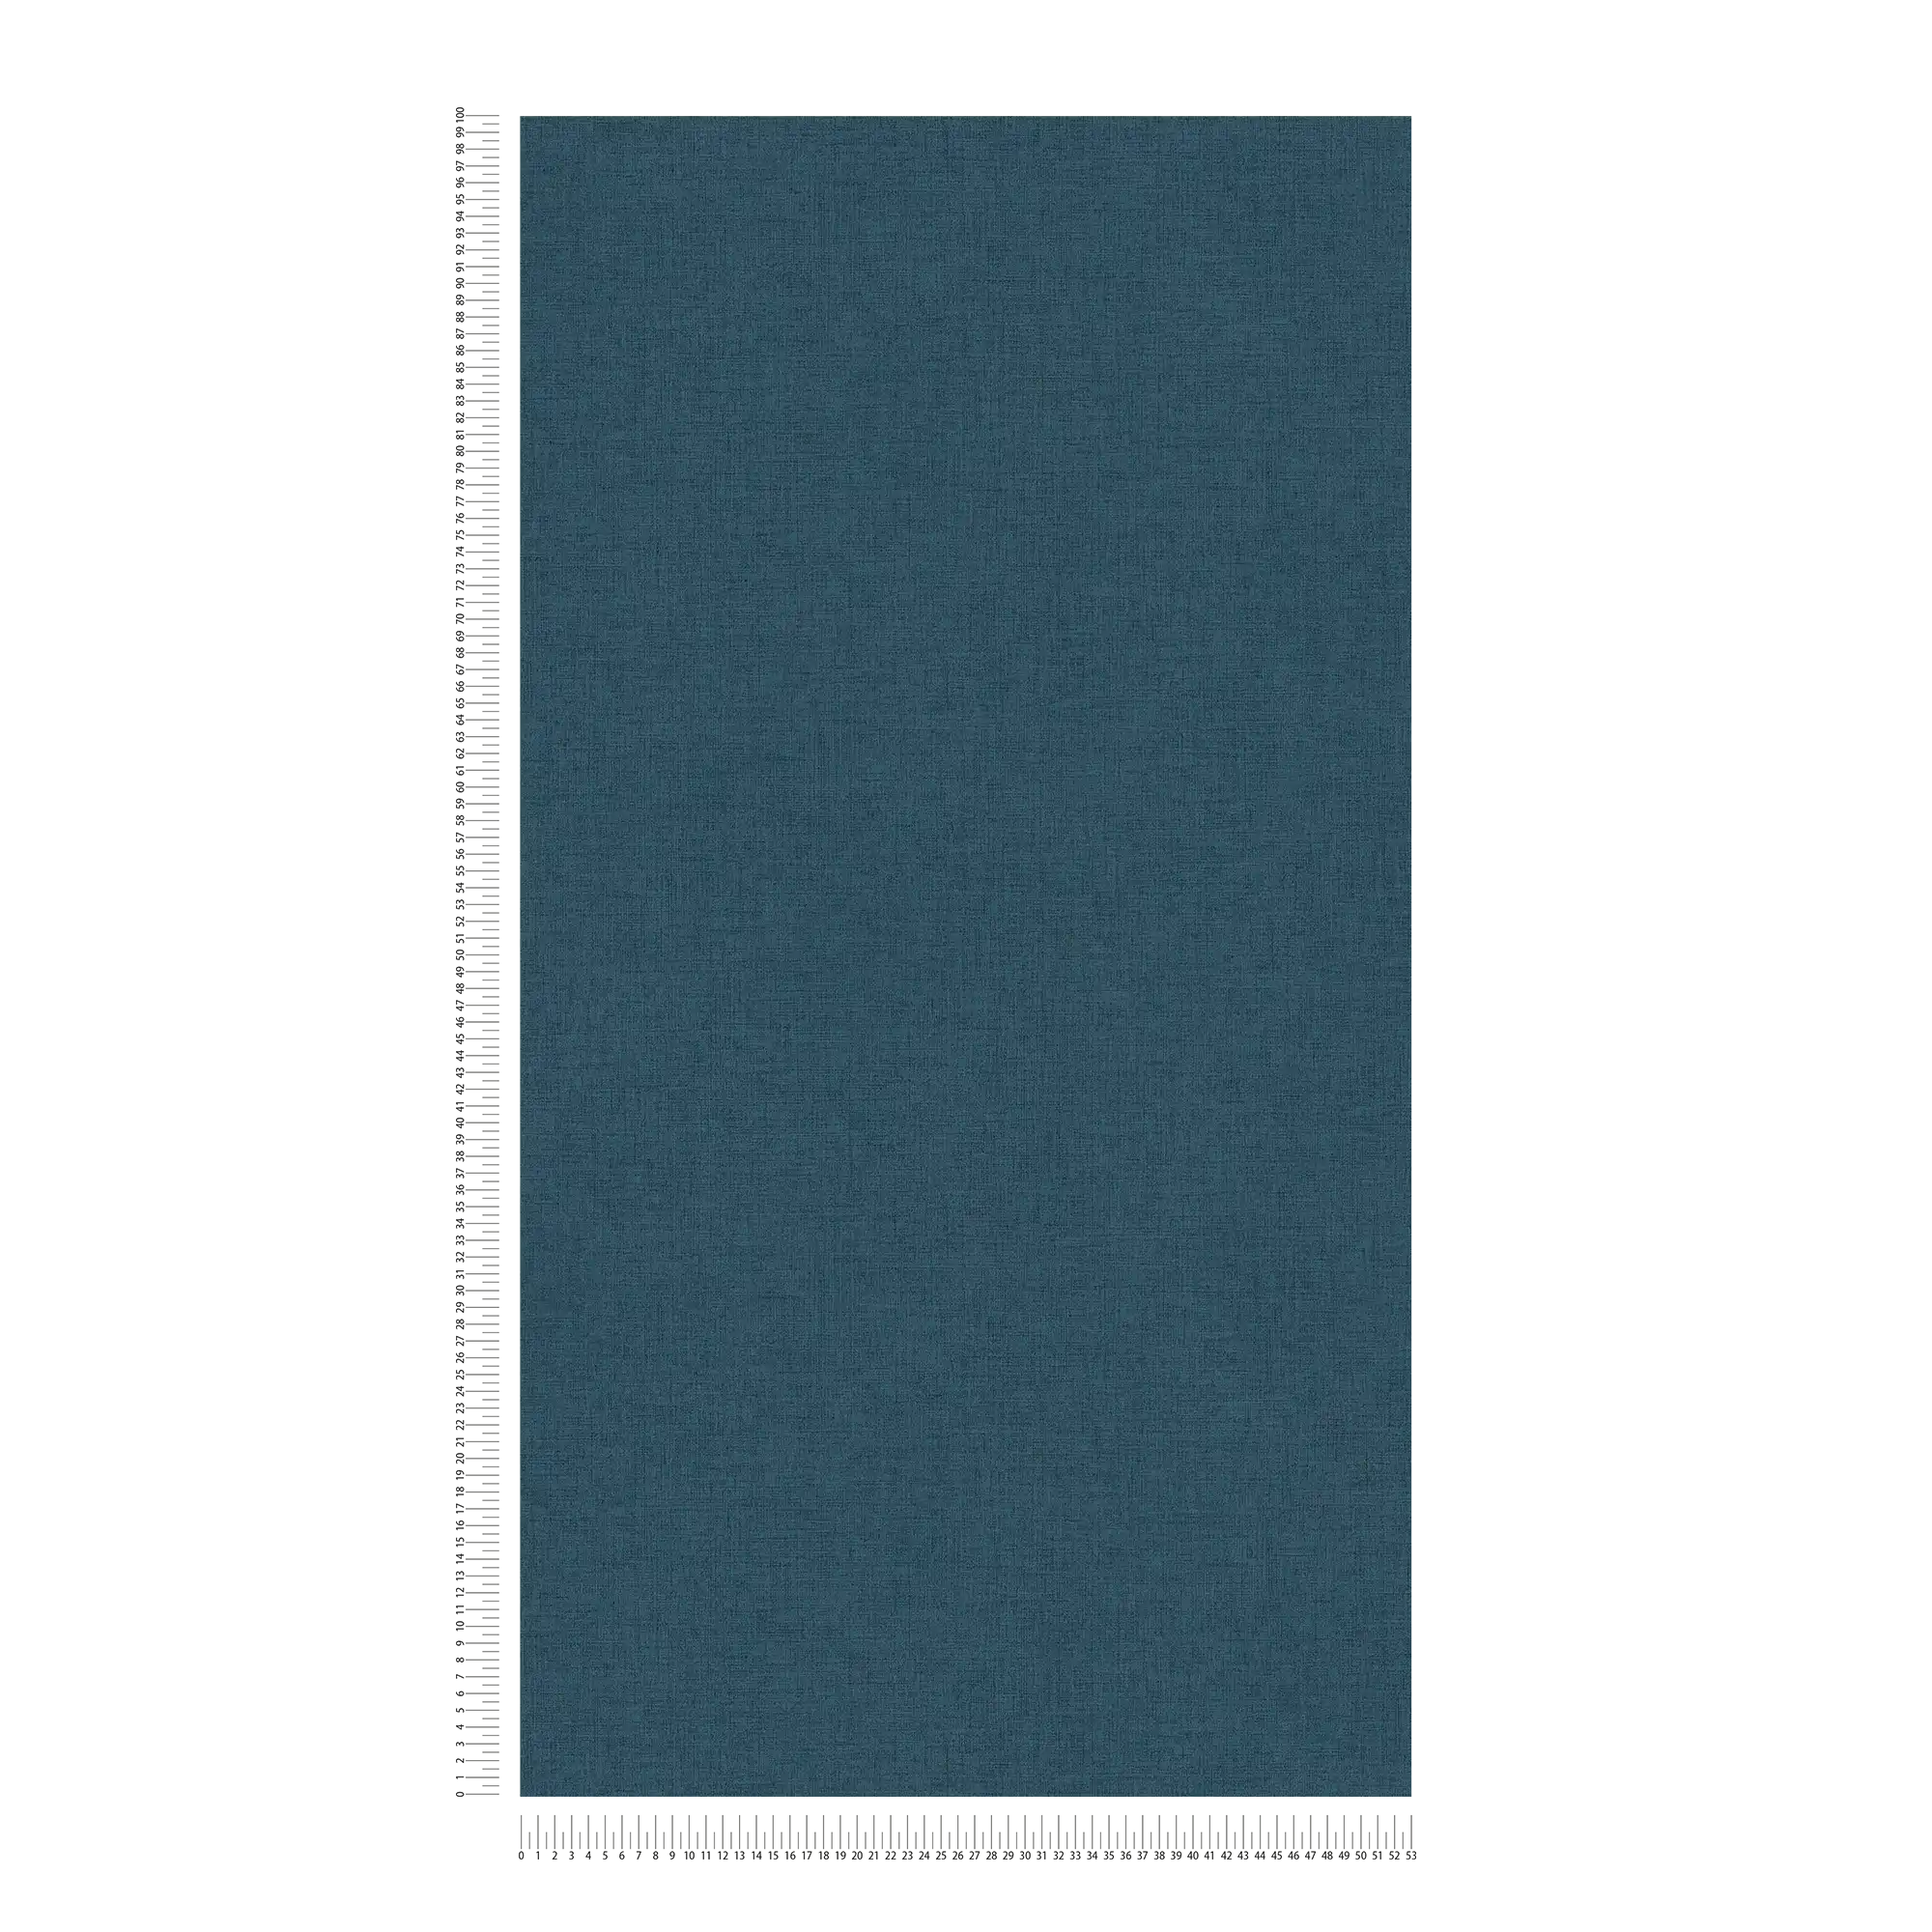             Linen look non-woven wallpaper in petrol blue
        